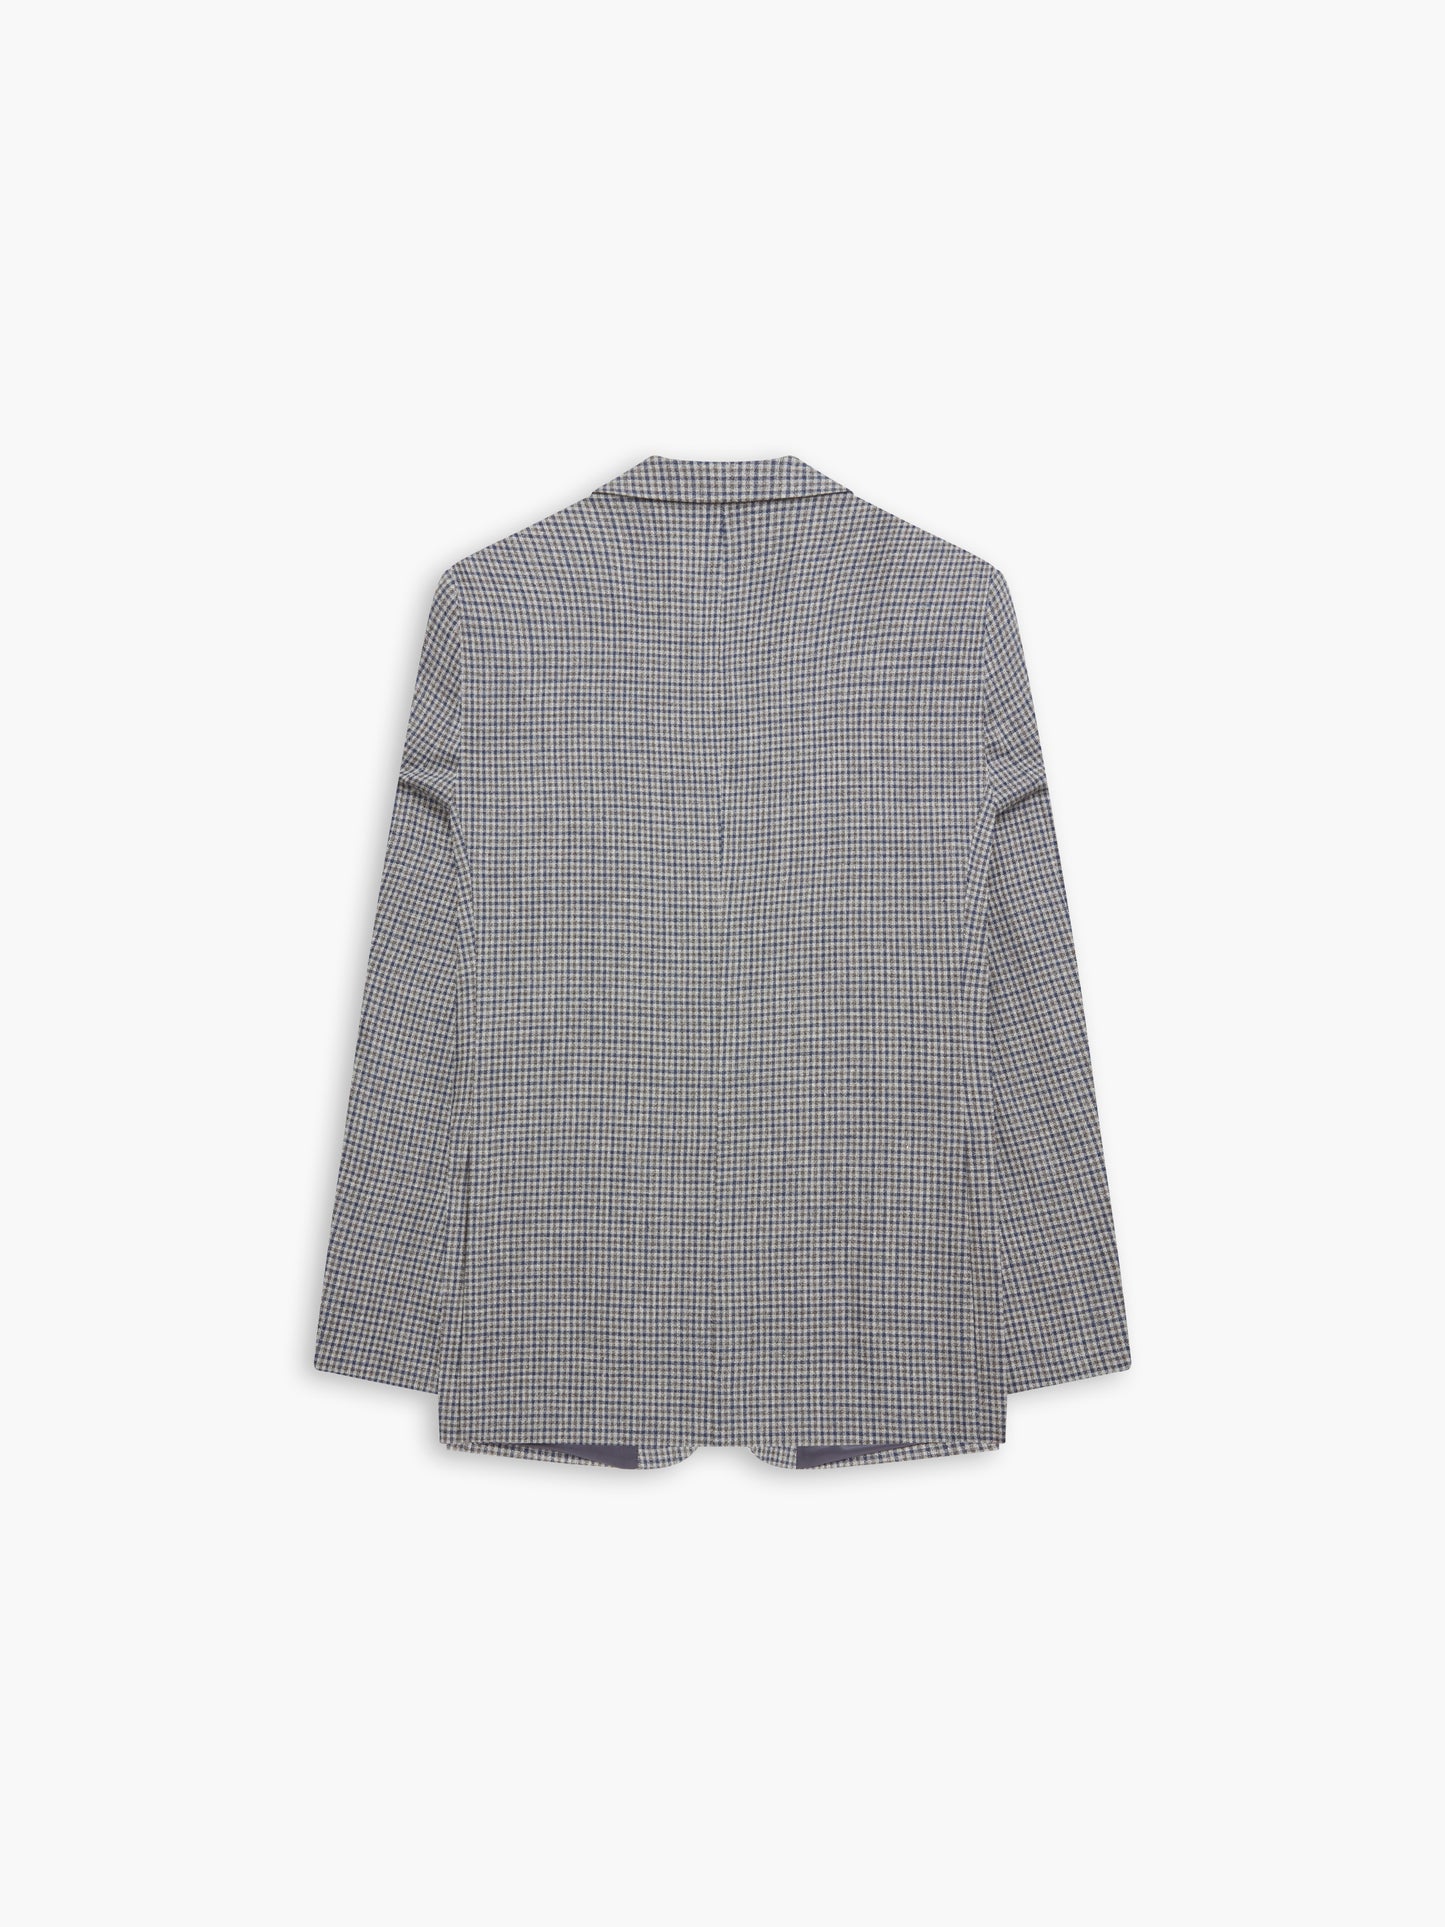 Ravello Italian Luxury Slim Linen Grey & Navy Microcheck Suit Jacket